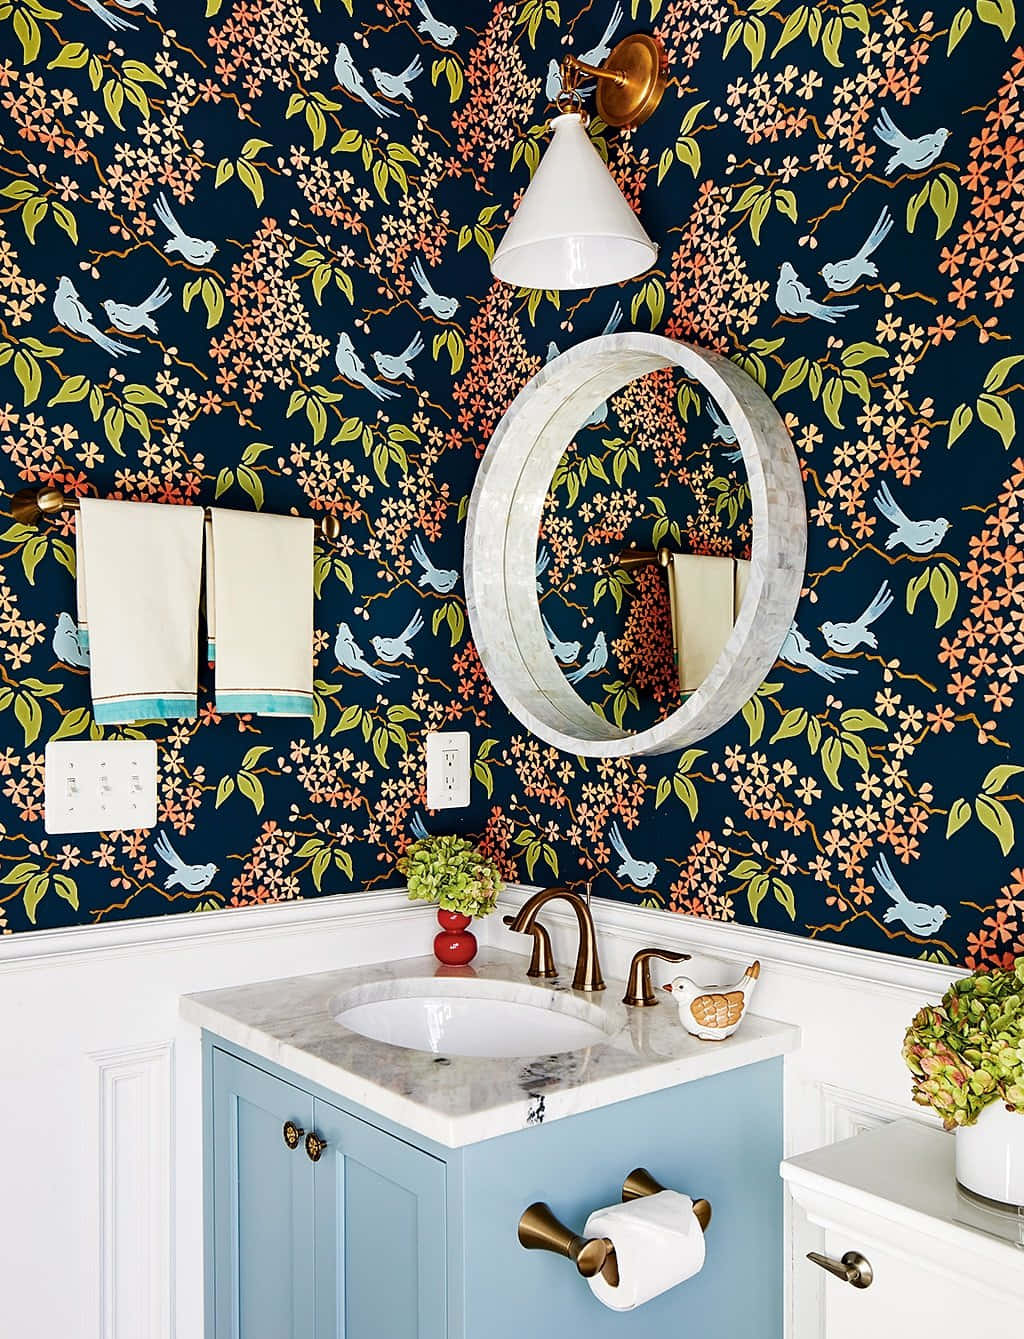 Download Bathroom Bird Patterned Walls Wallpaper 